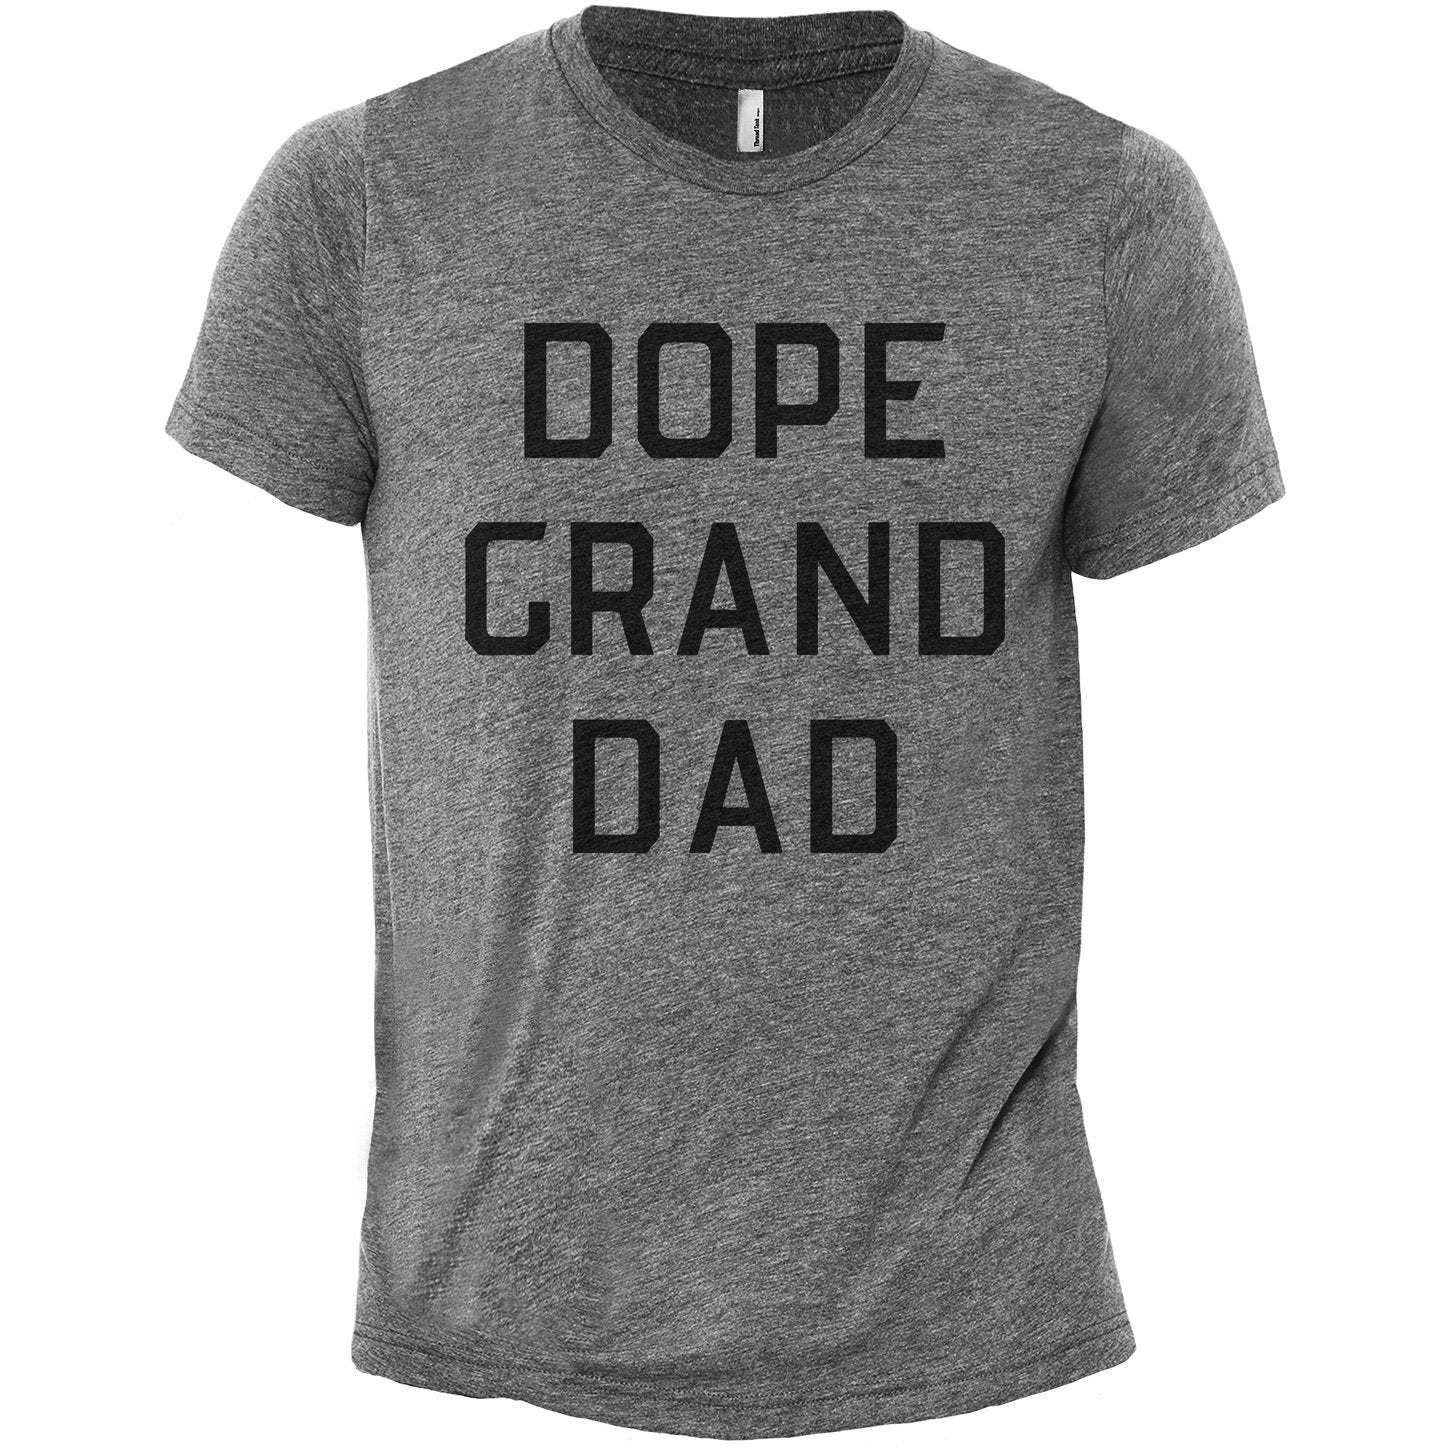 Dope Granddad Heather Grey Printed Graphic Men's Crew T-Shirt Tee